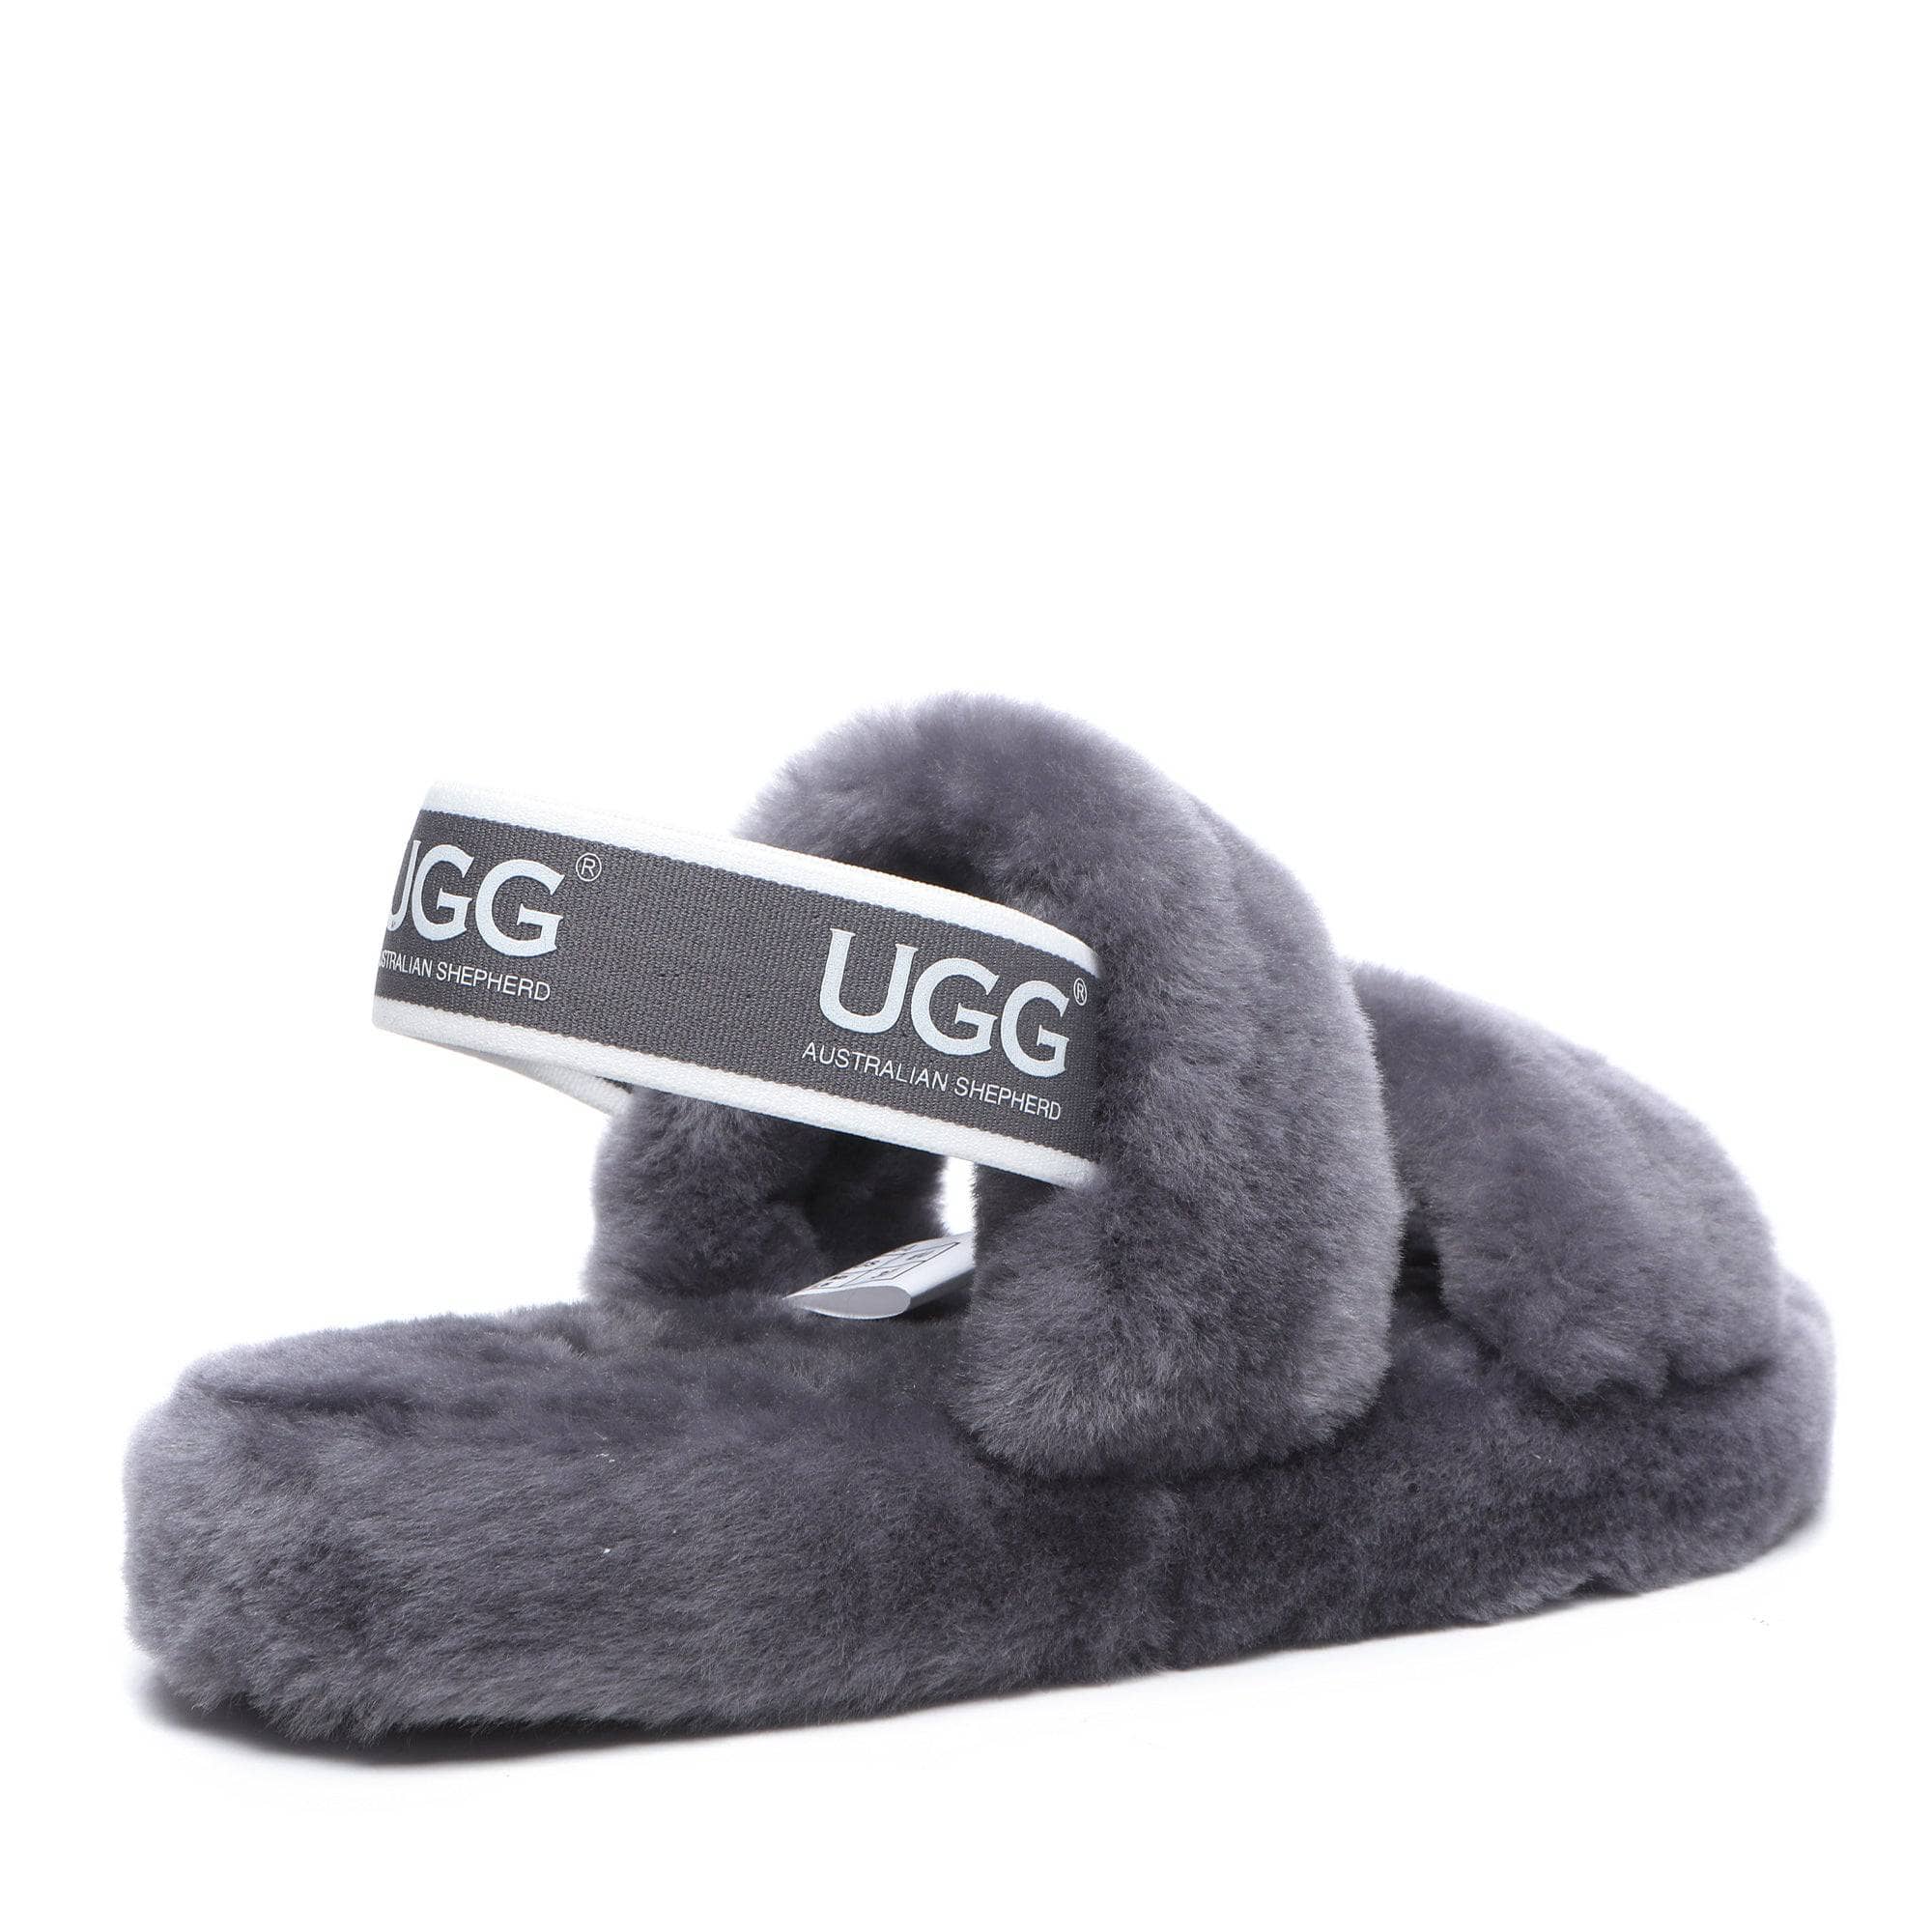  - UGG Women's Fluffy Slippers - Original UGG Australia Classic